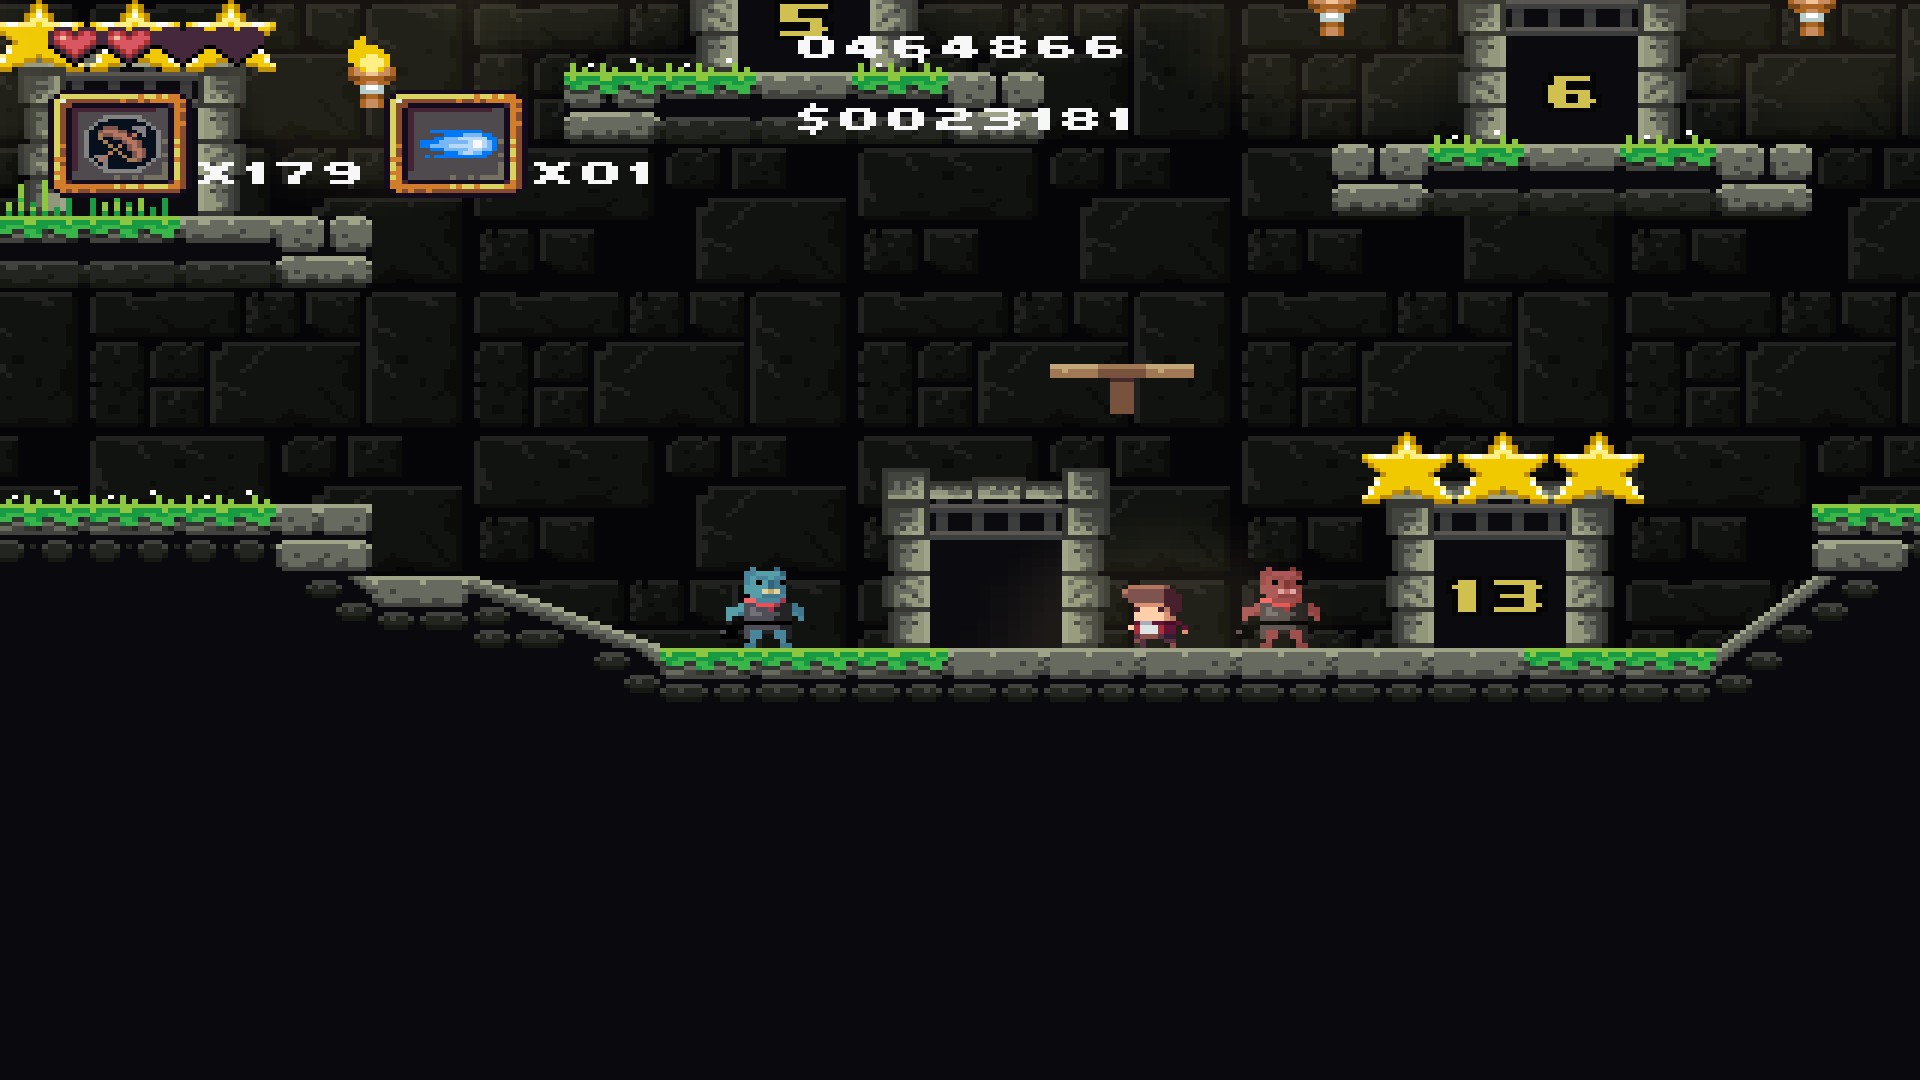 In Dungeon screenshot